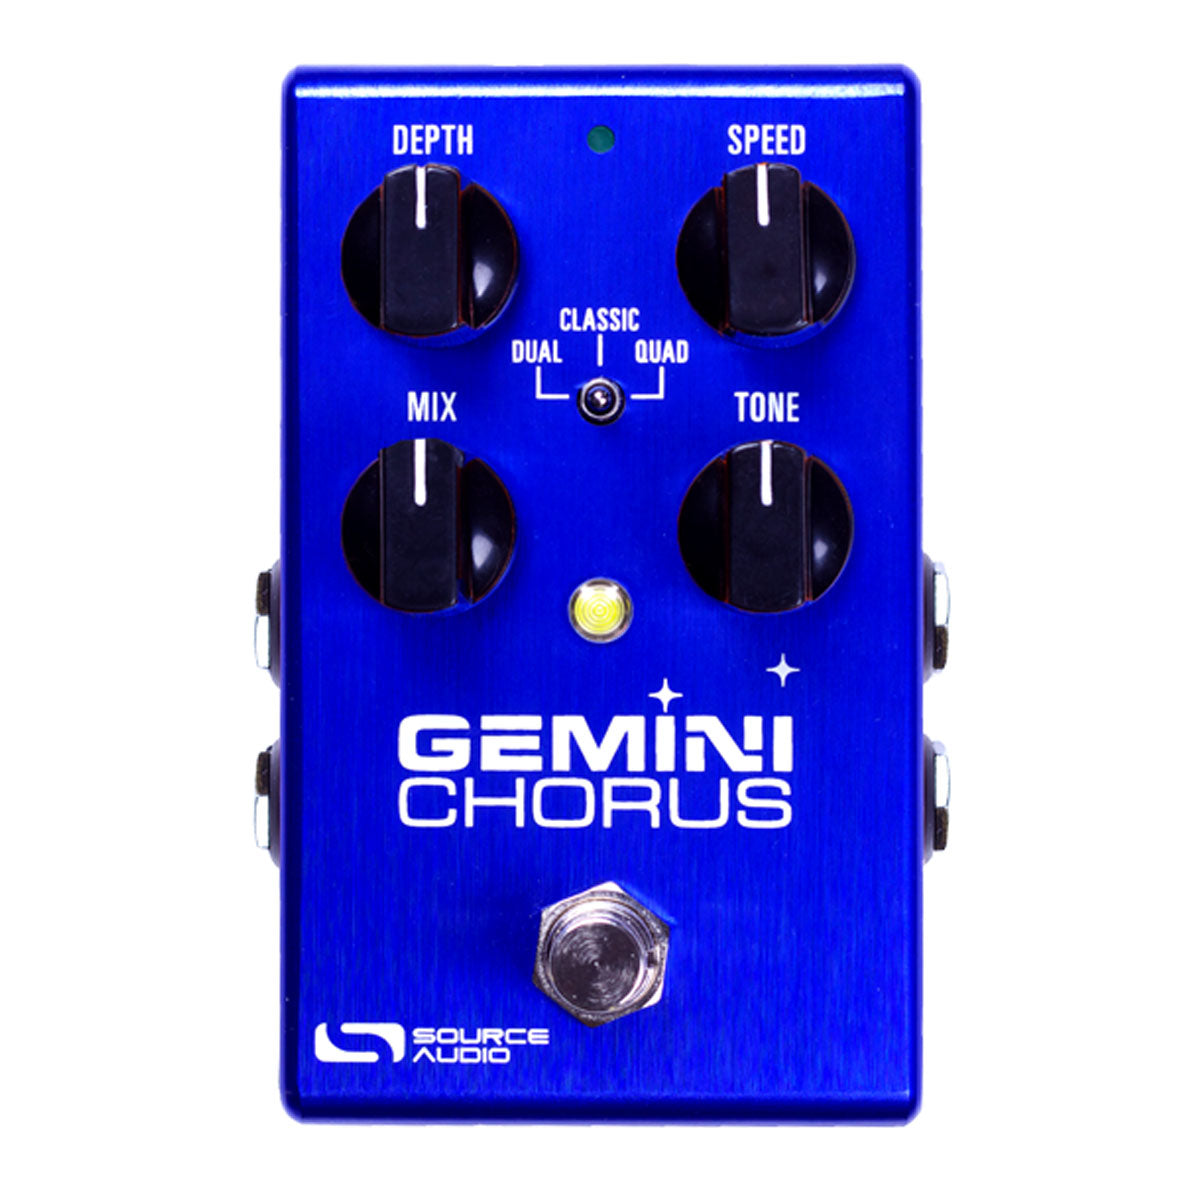 Source Audio One Series Gemini Chorus Effects Pedal